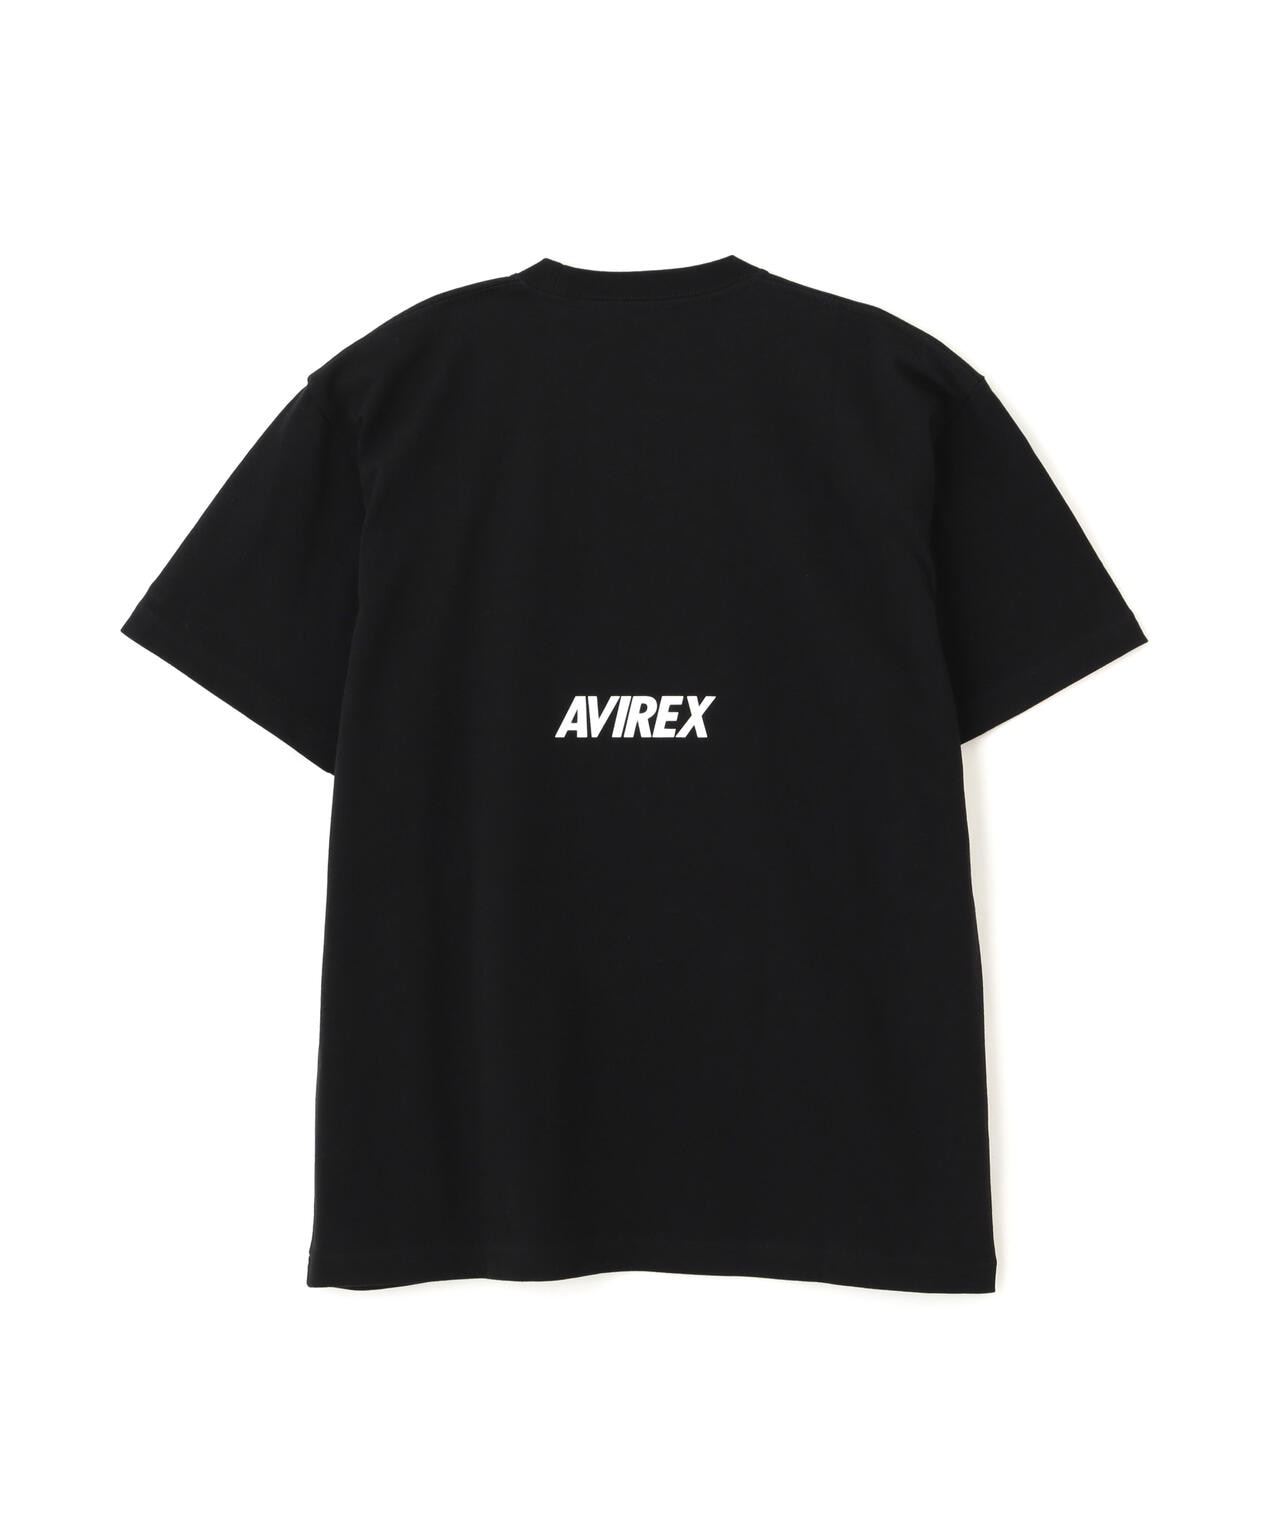 AVIREX × NEW ERA》NEW ERA POCKET S/S T-SHIRT NEWYORK | AVIREX 